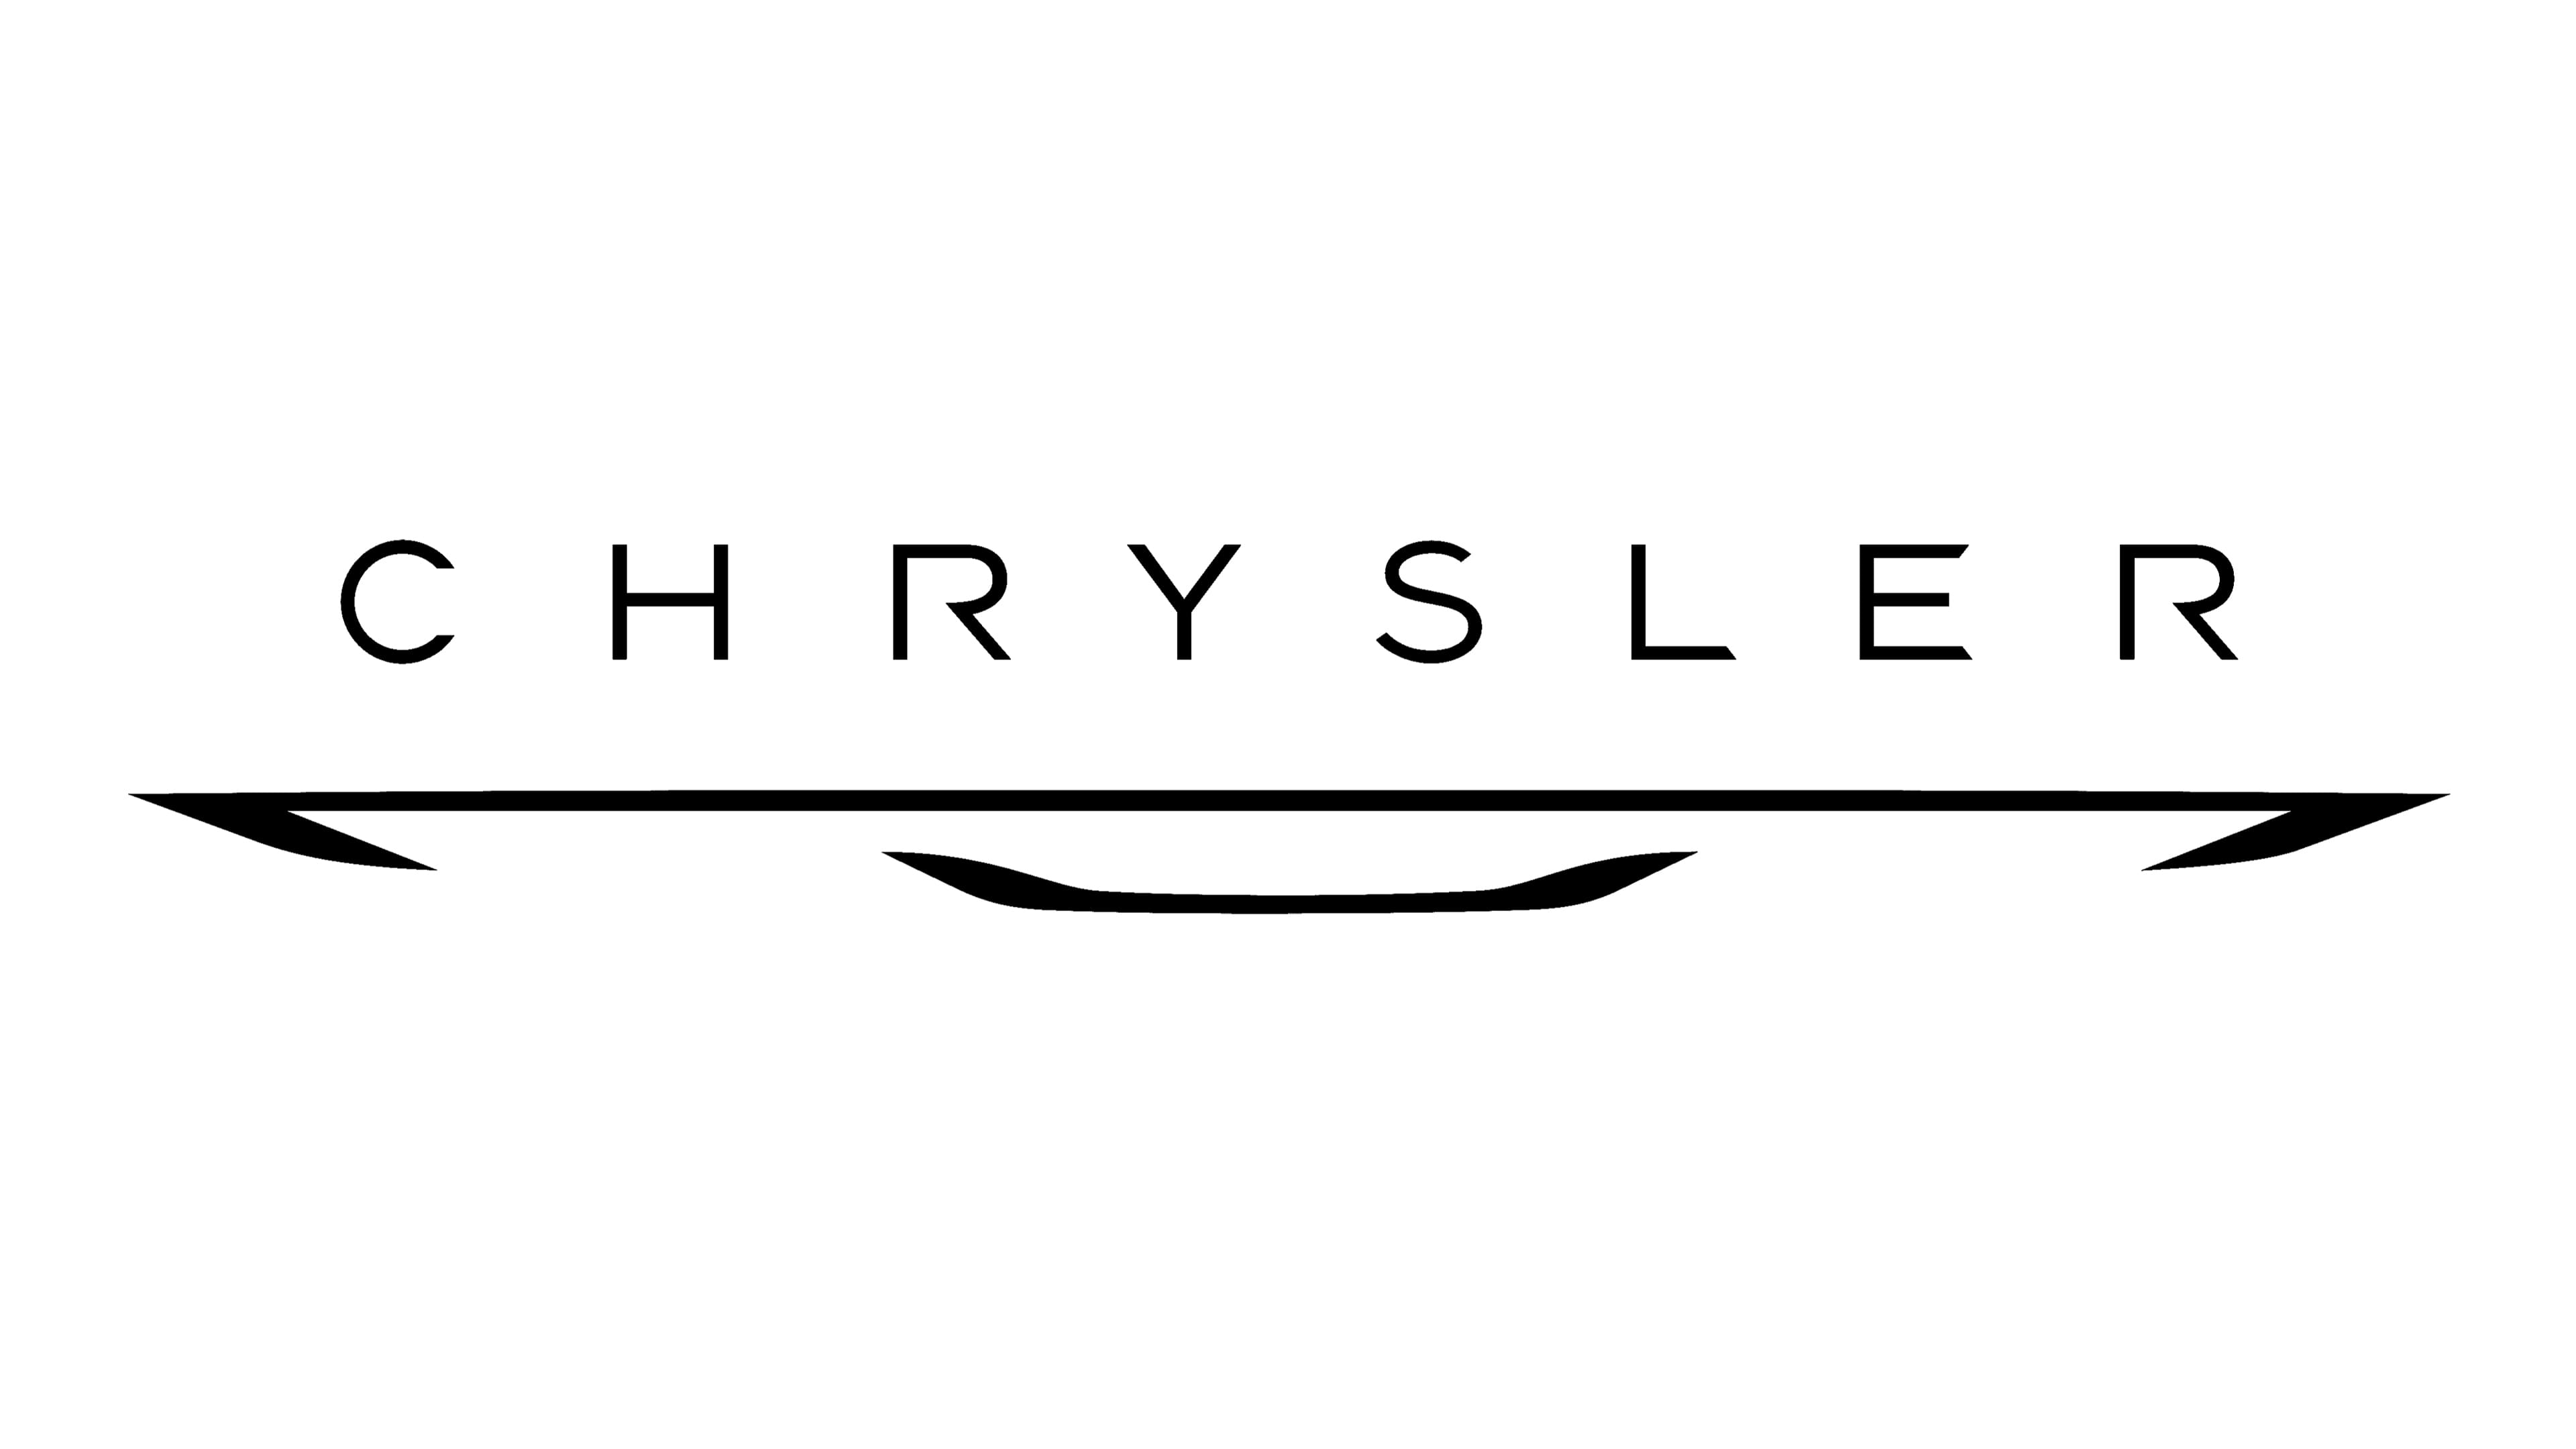 Chrysler Logo, Chrysler Car Symbol Meaning and History | Car Brand